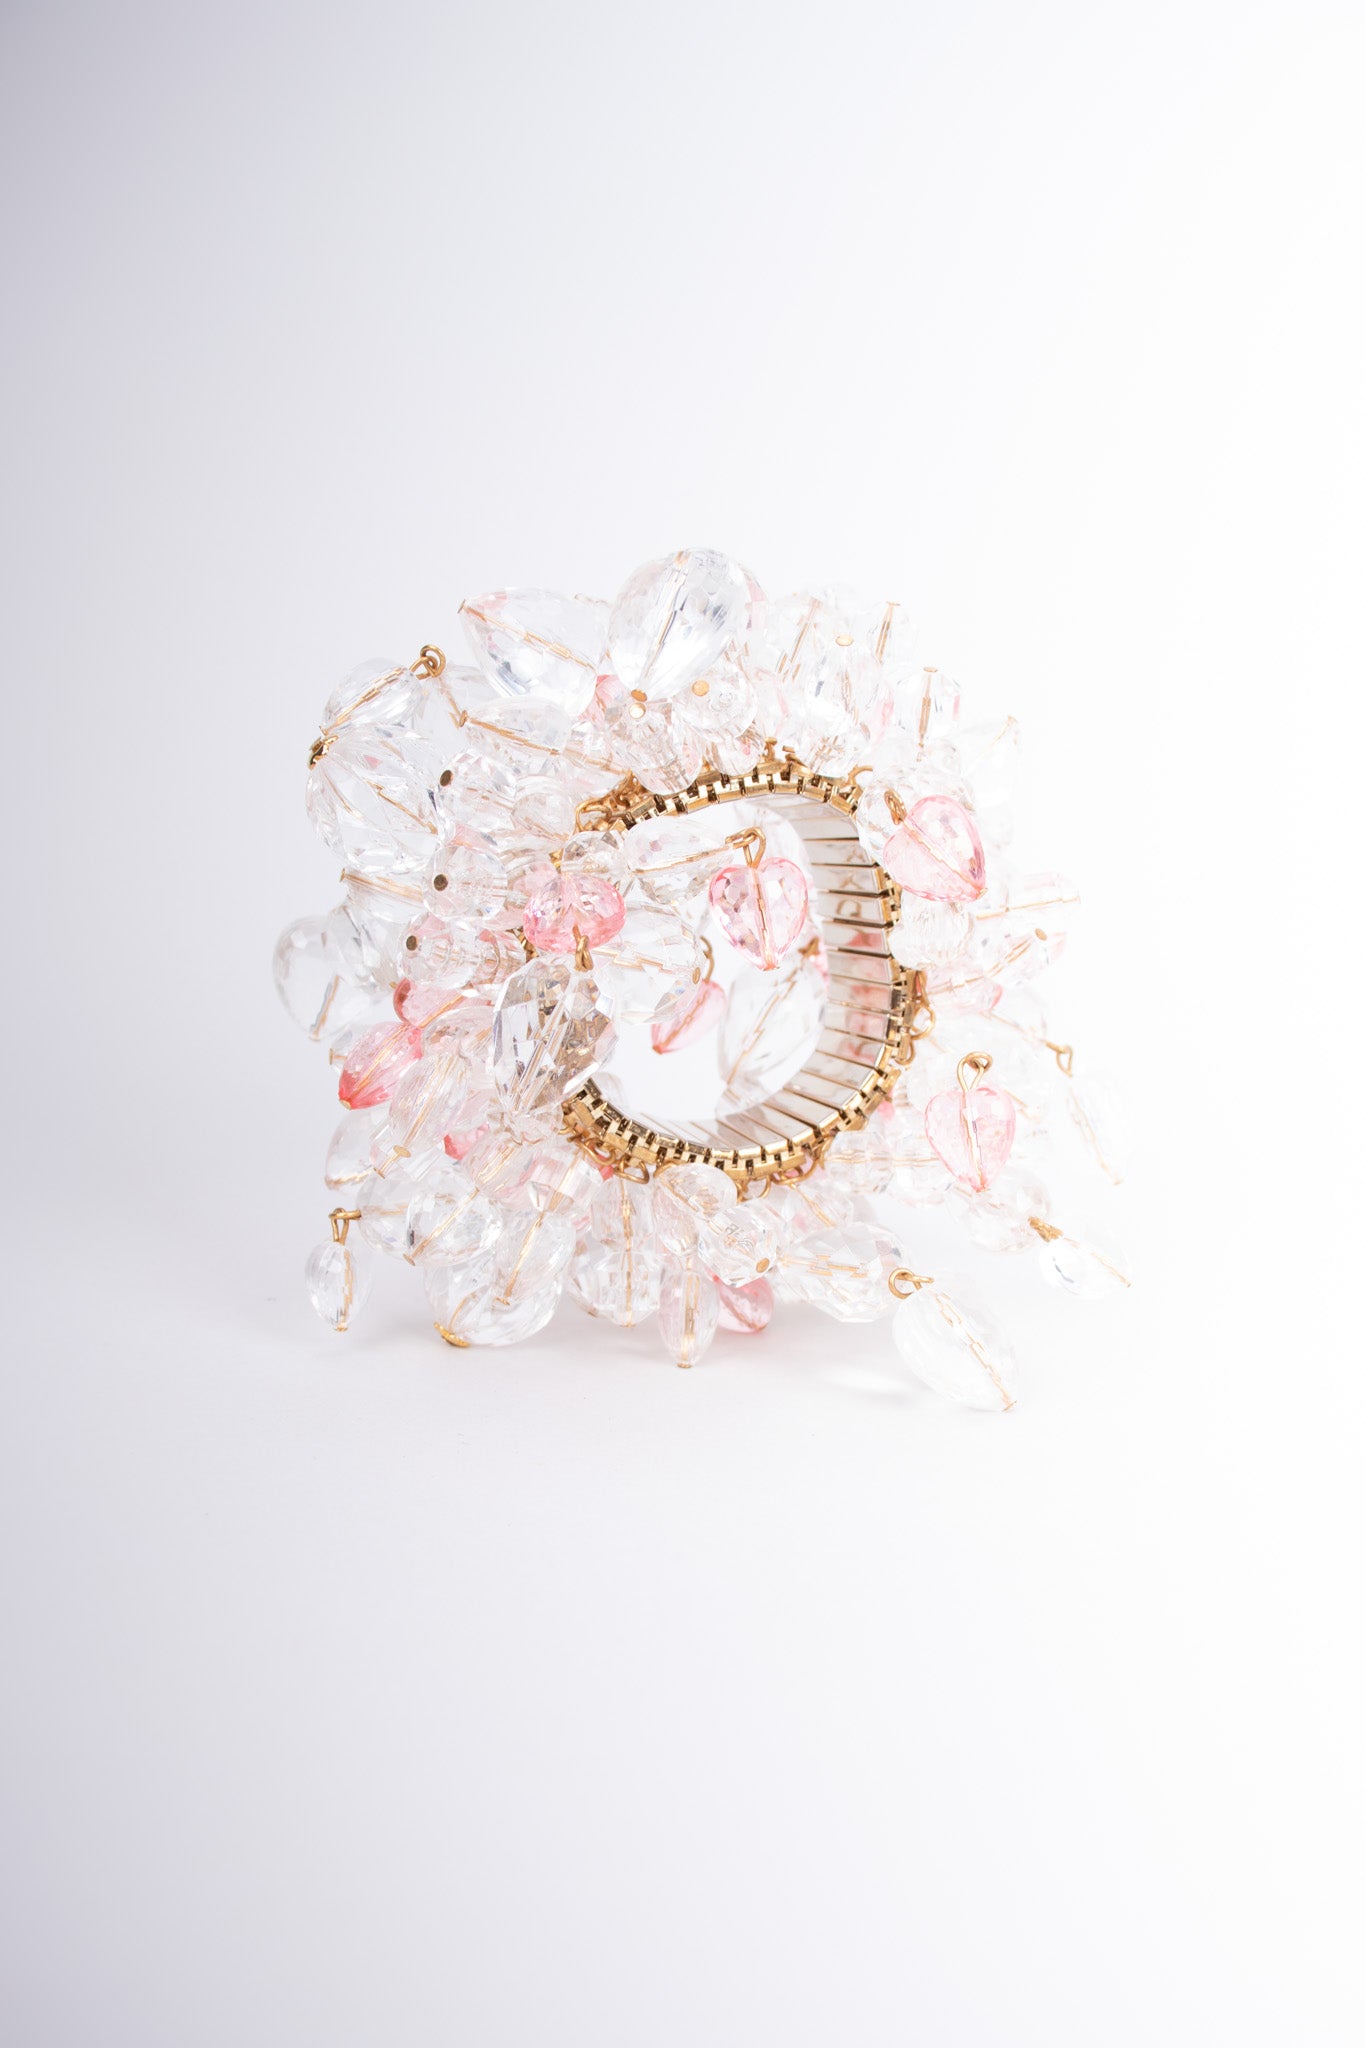 Vintage Crystalline Candy Hearts Charm Bracelet